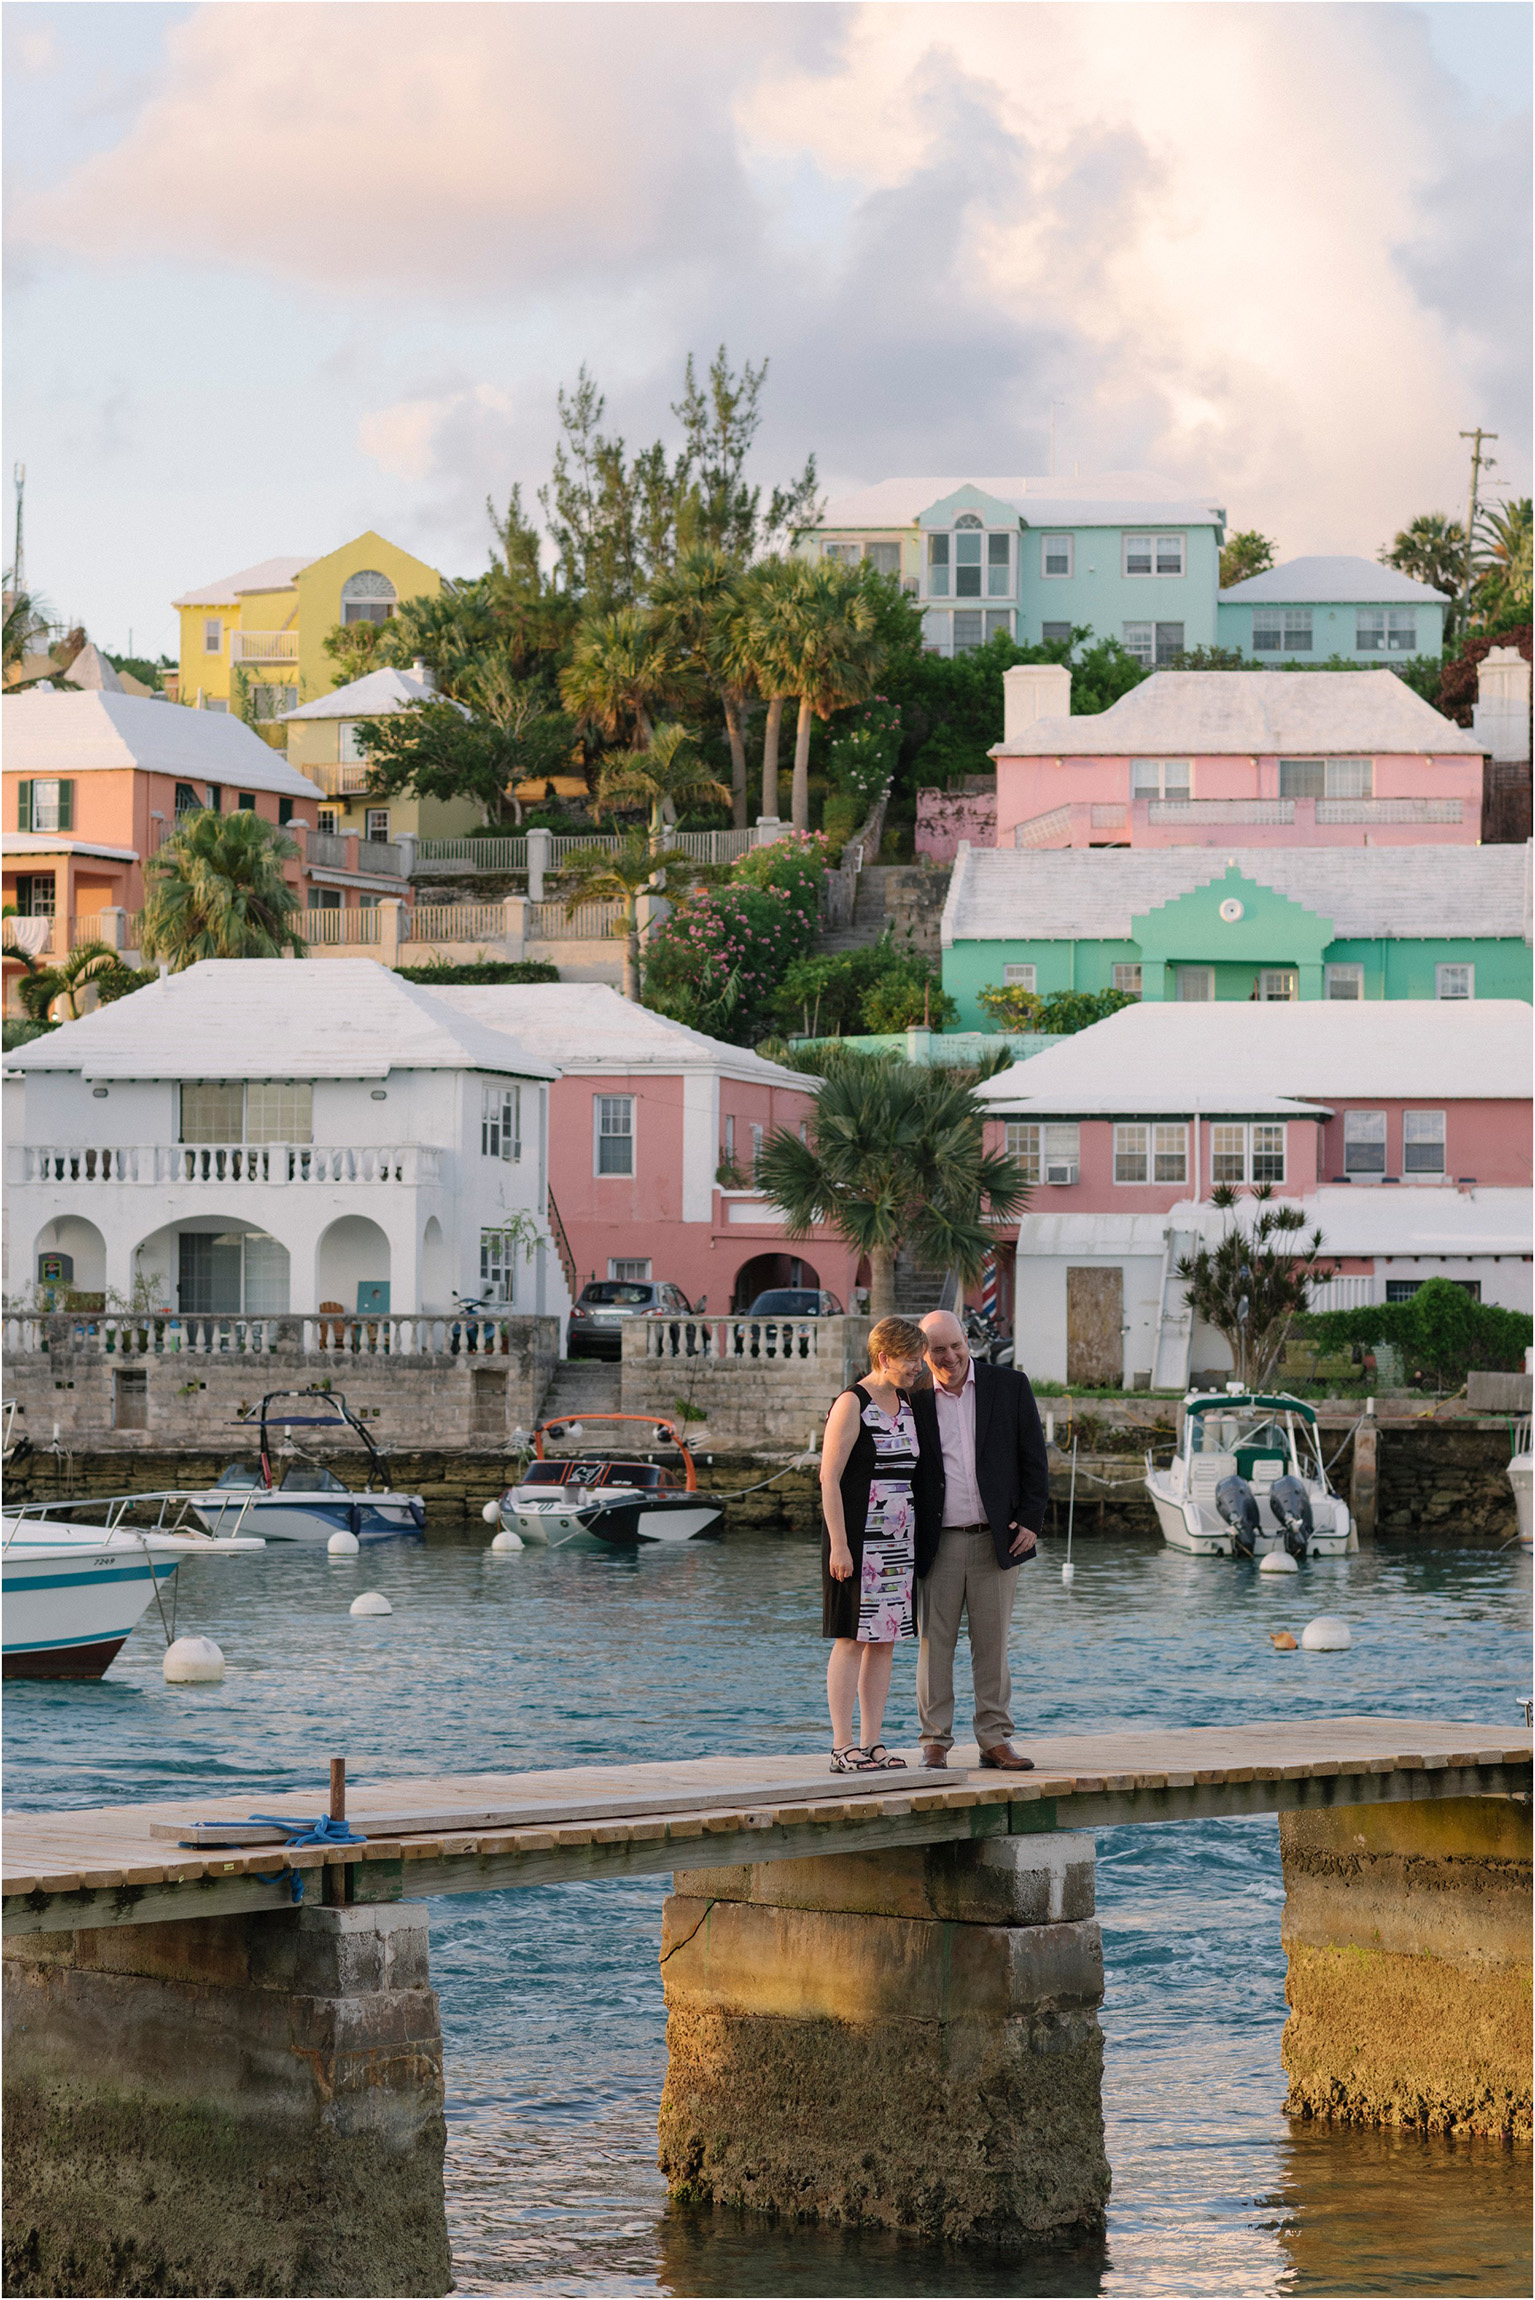 ©FianderFoto_Bermuda Photographer_Flatts Village_Cooper's Island_Andrea_018.jpg